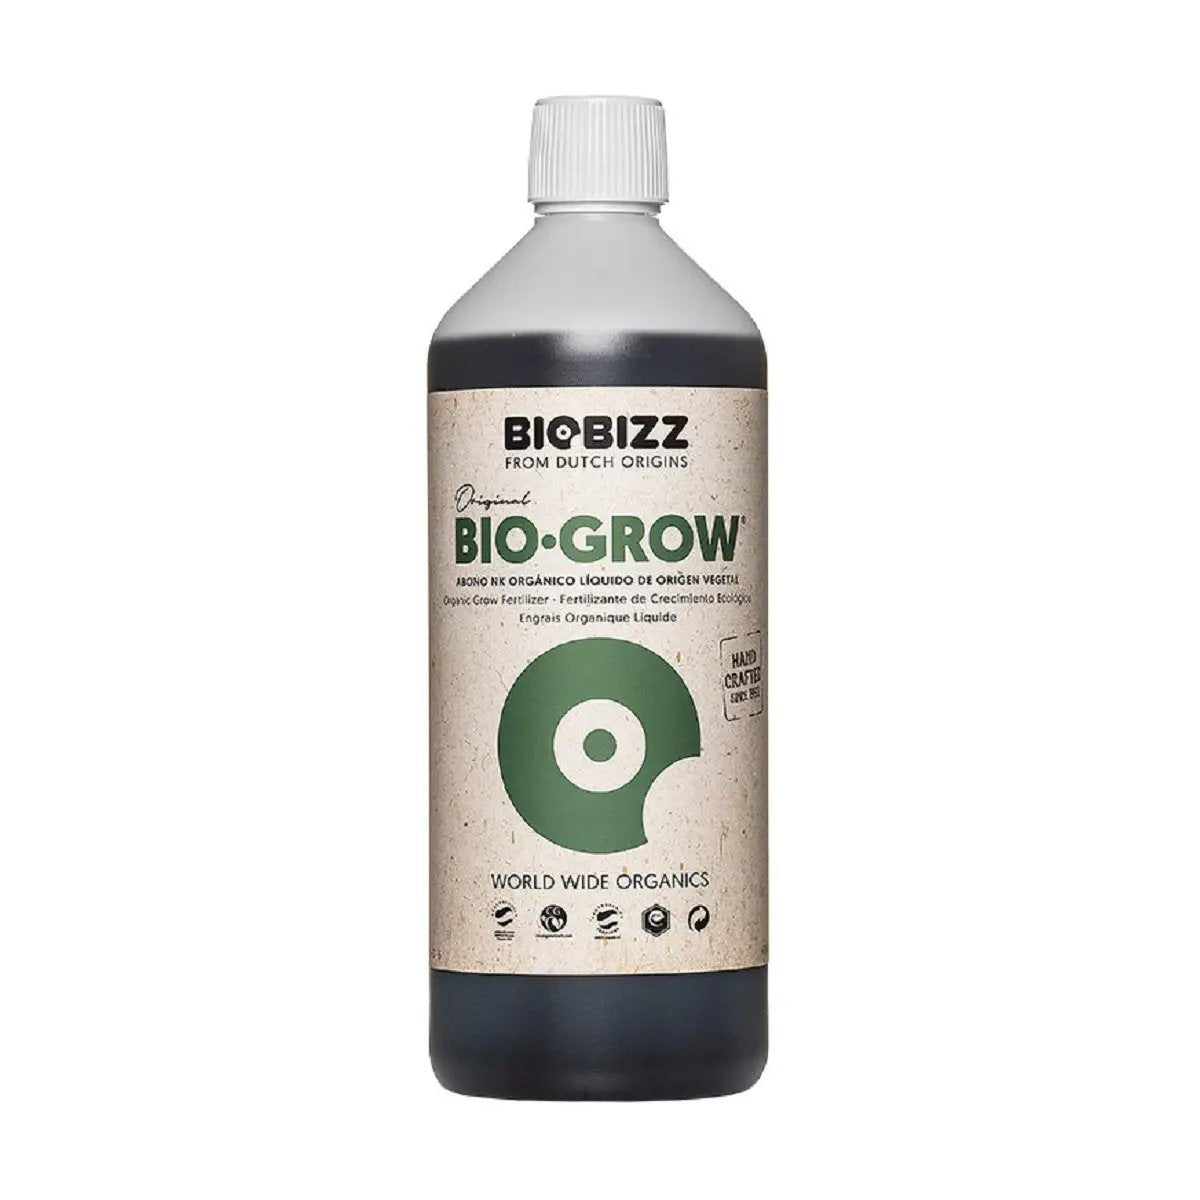 Engrais de croissance Biobizz Bio-Grow 1 litre